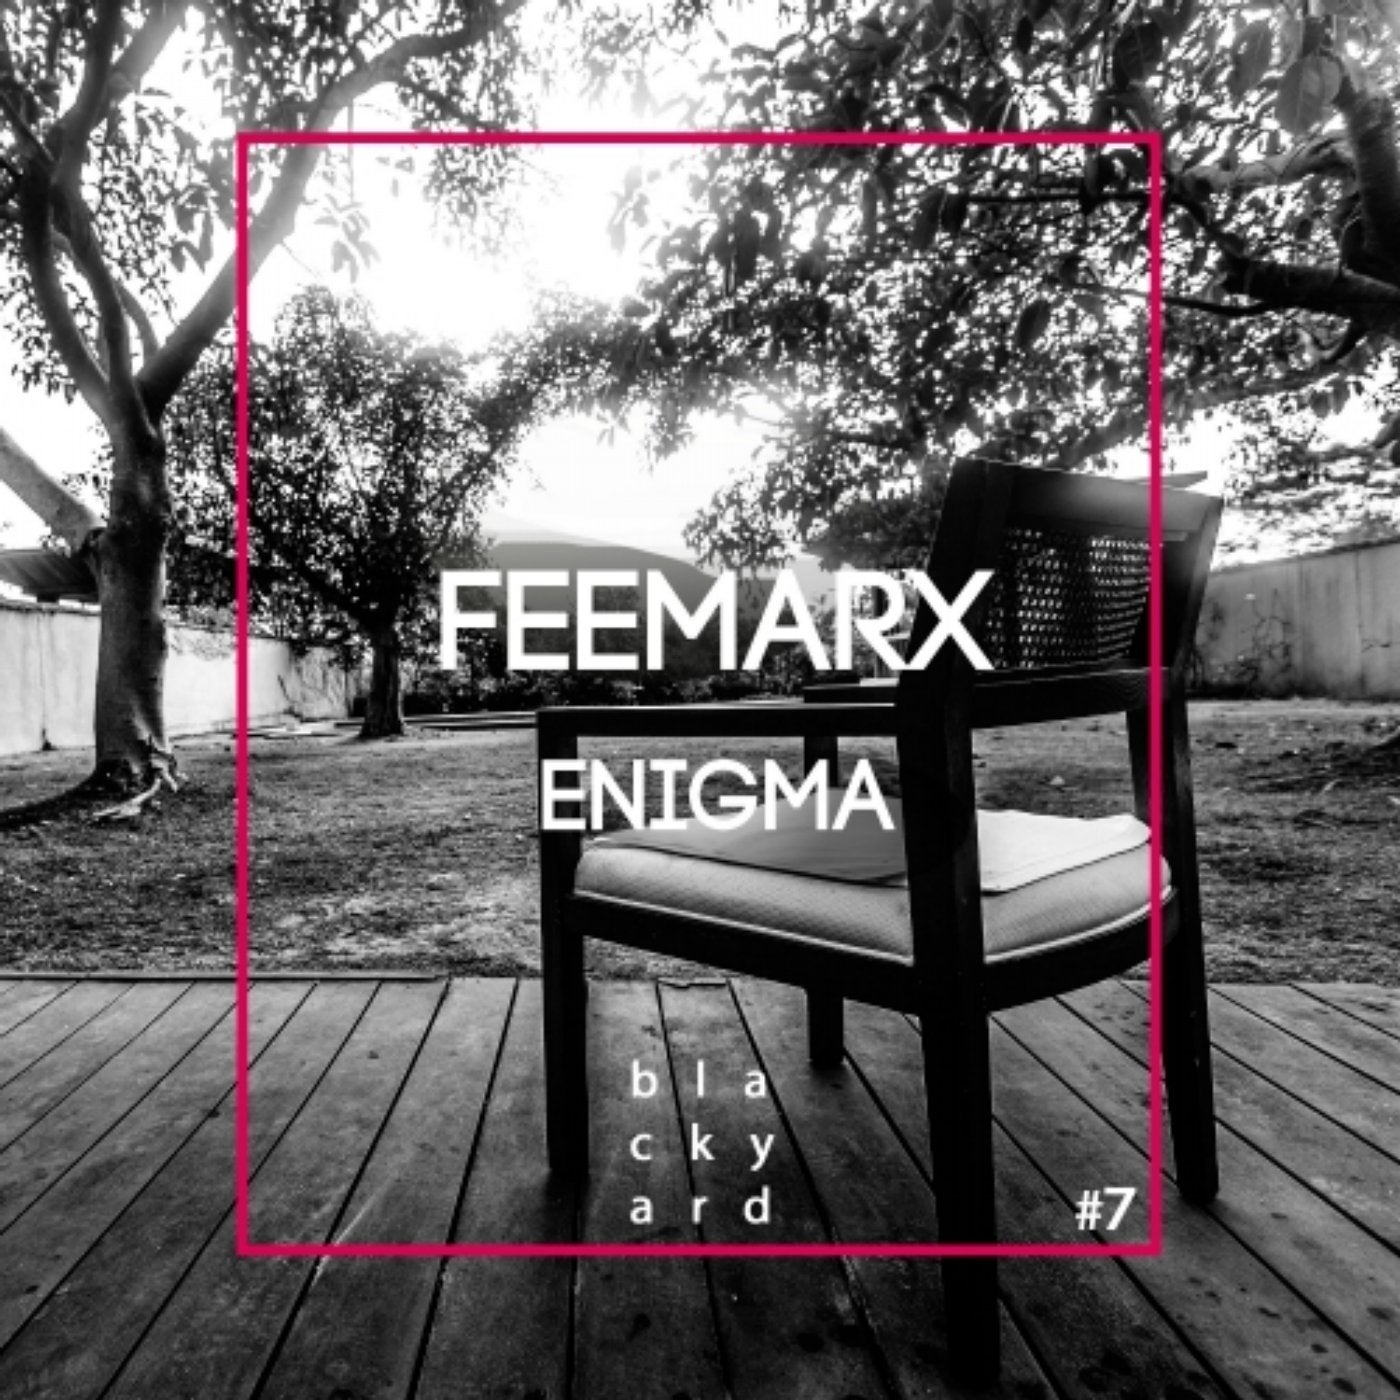 Enigma original mix. Энигма ремикс.